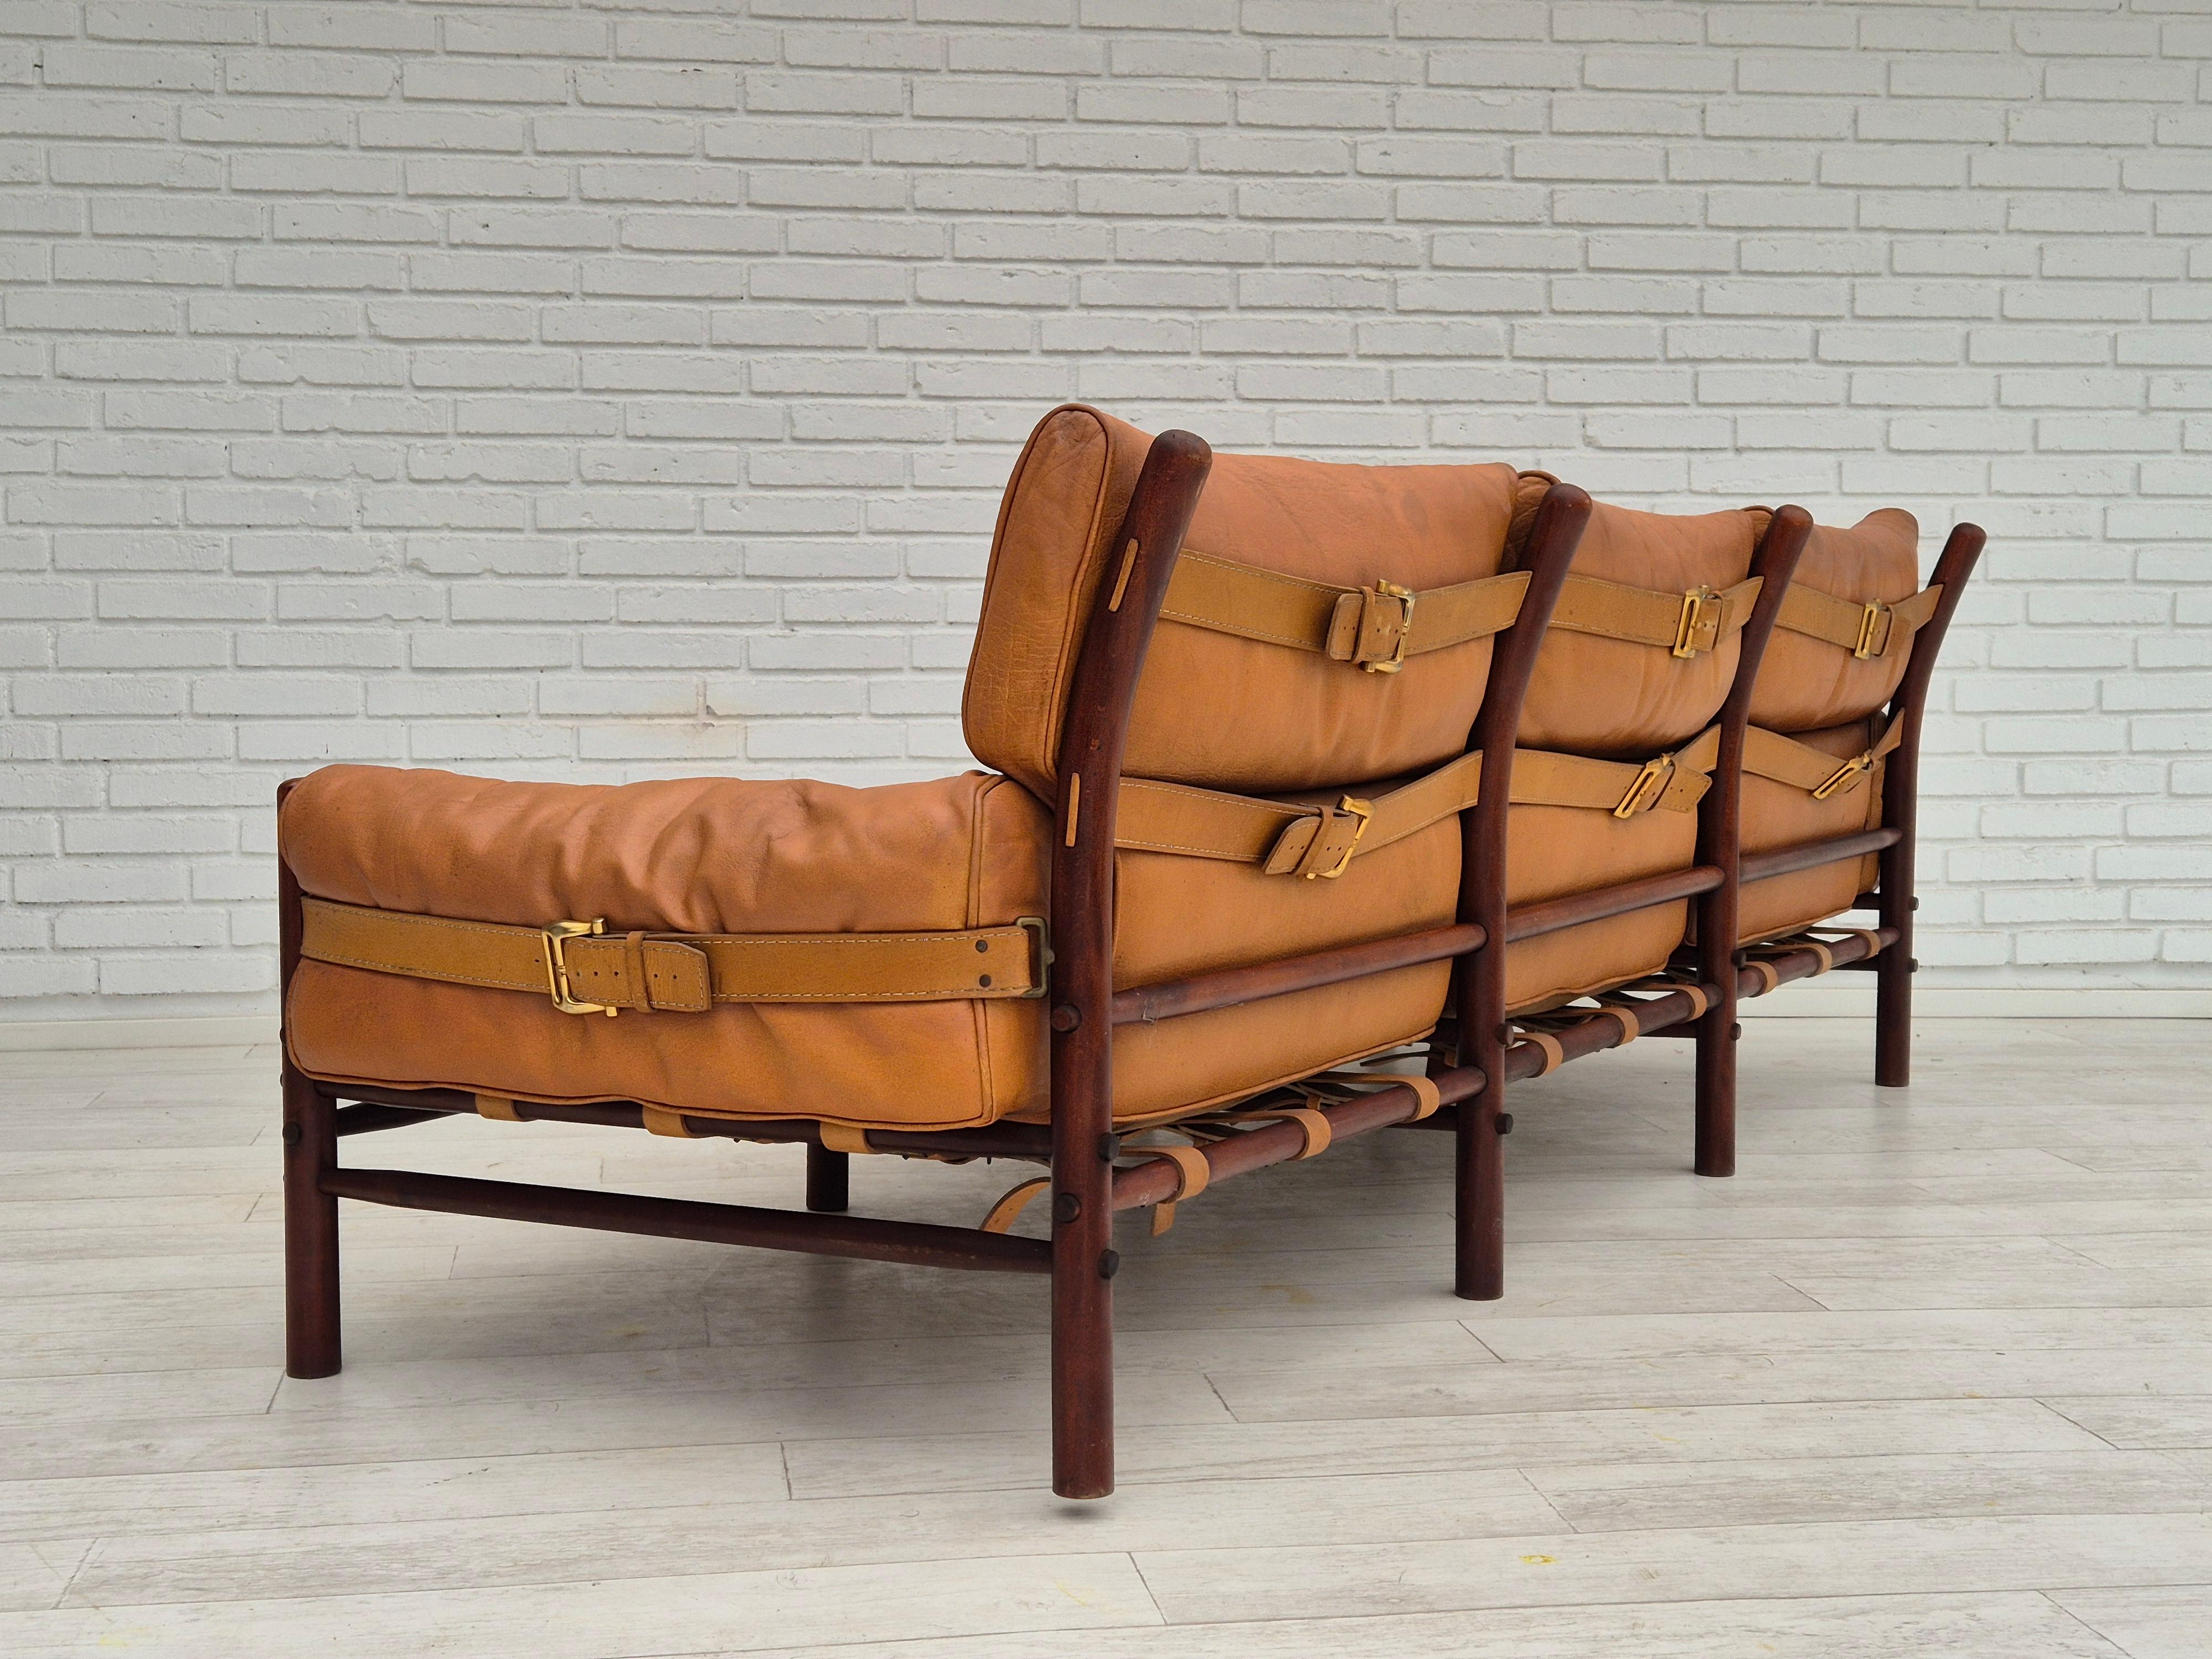 1960s, Scandinavian design by Arne Norell, sofa, model 